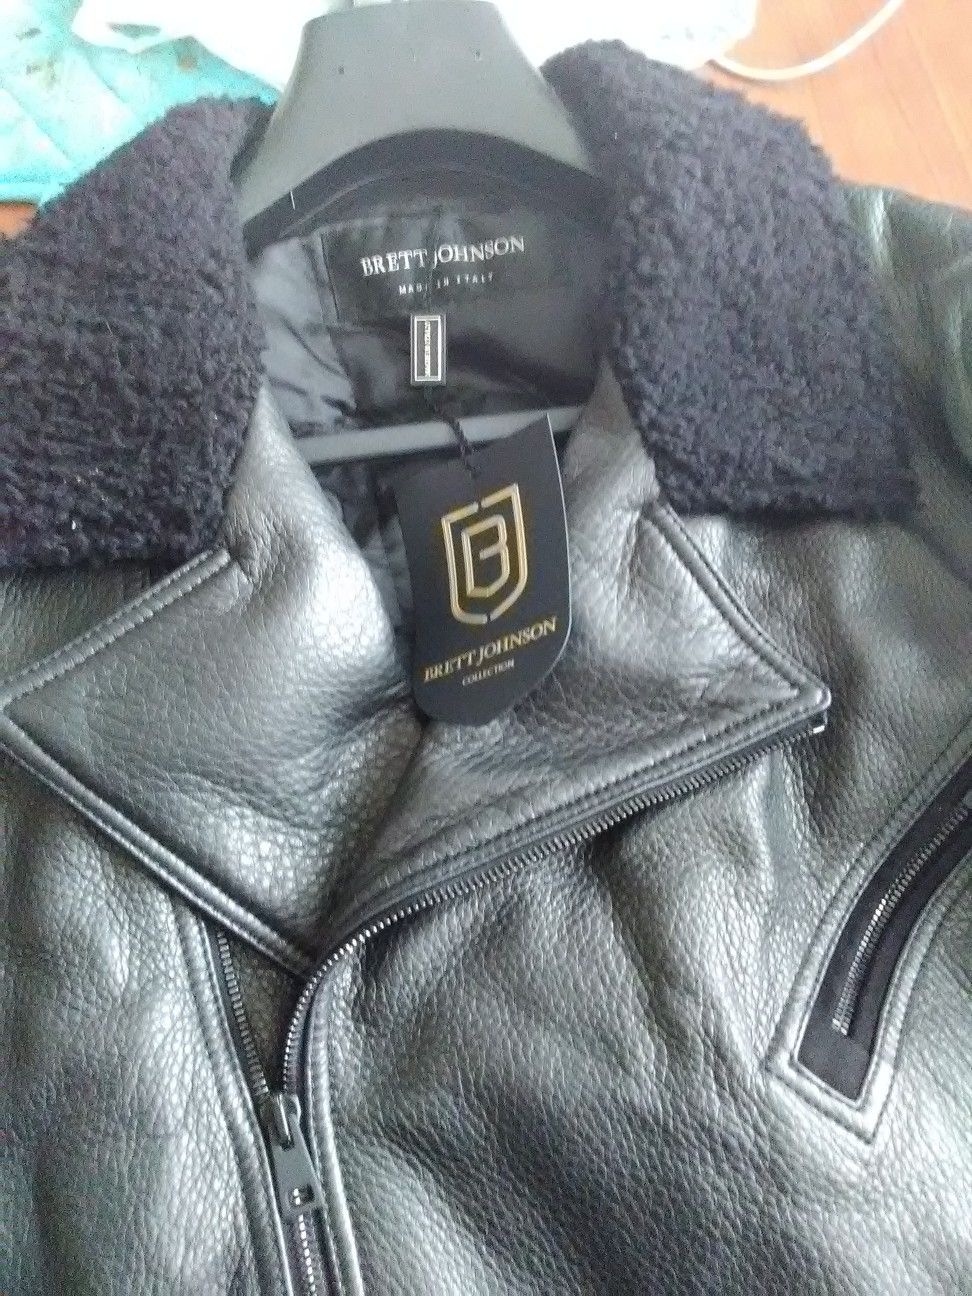 Brett Johnson black leather jacket